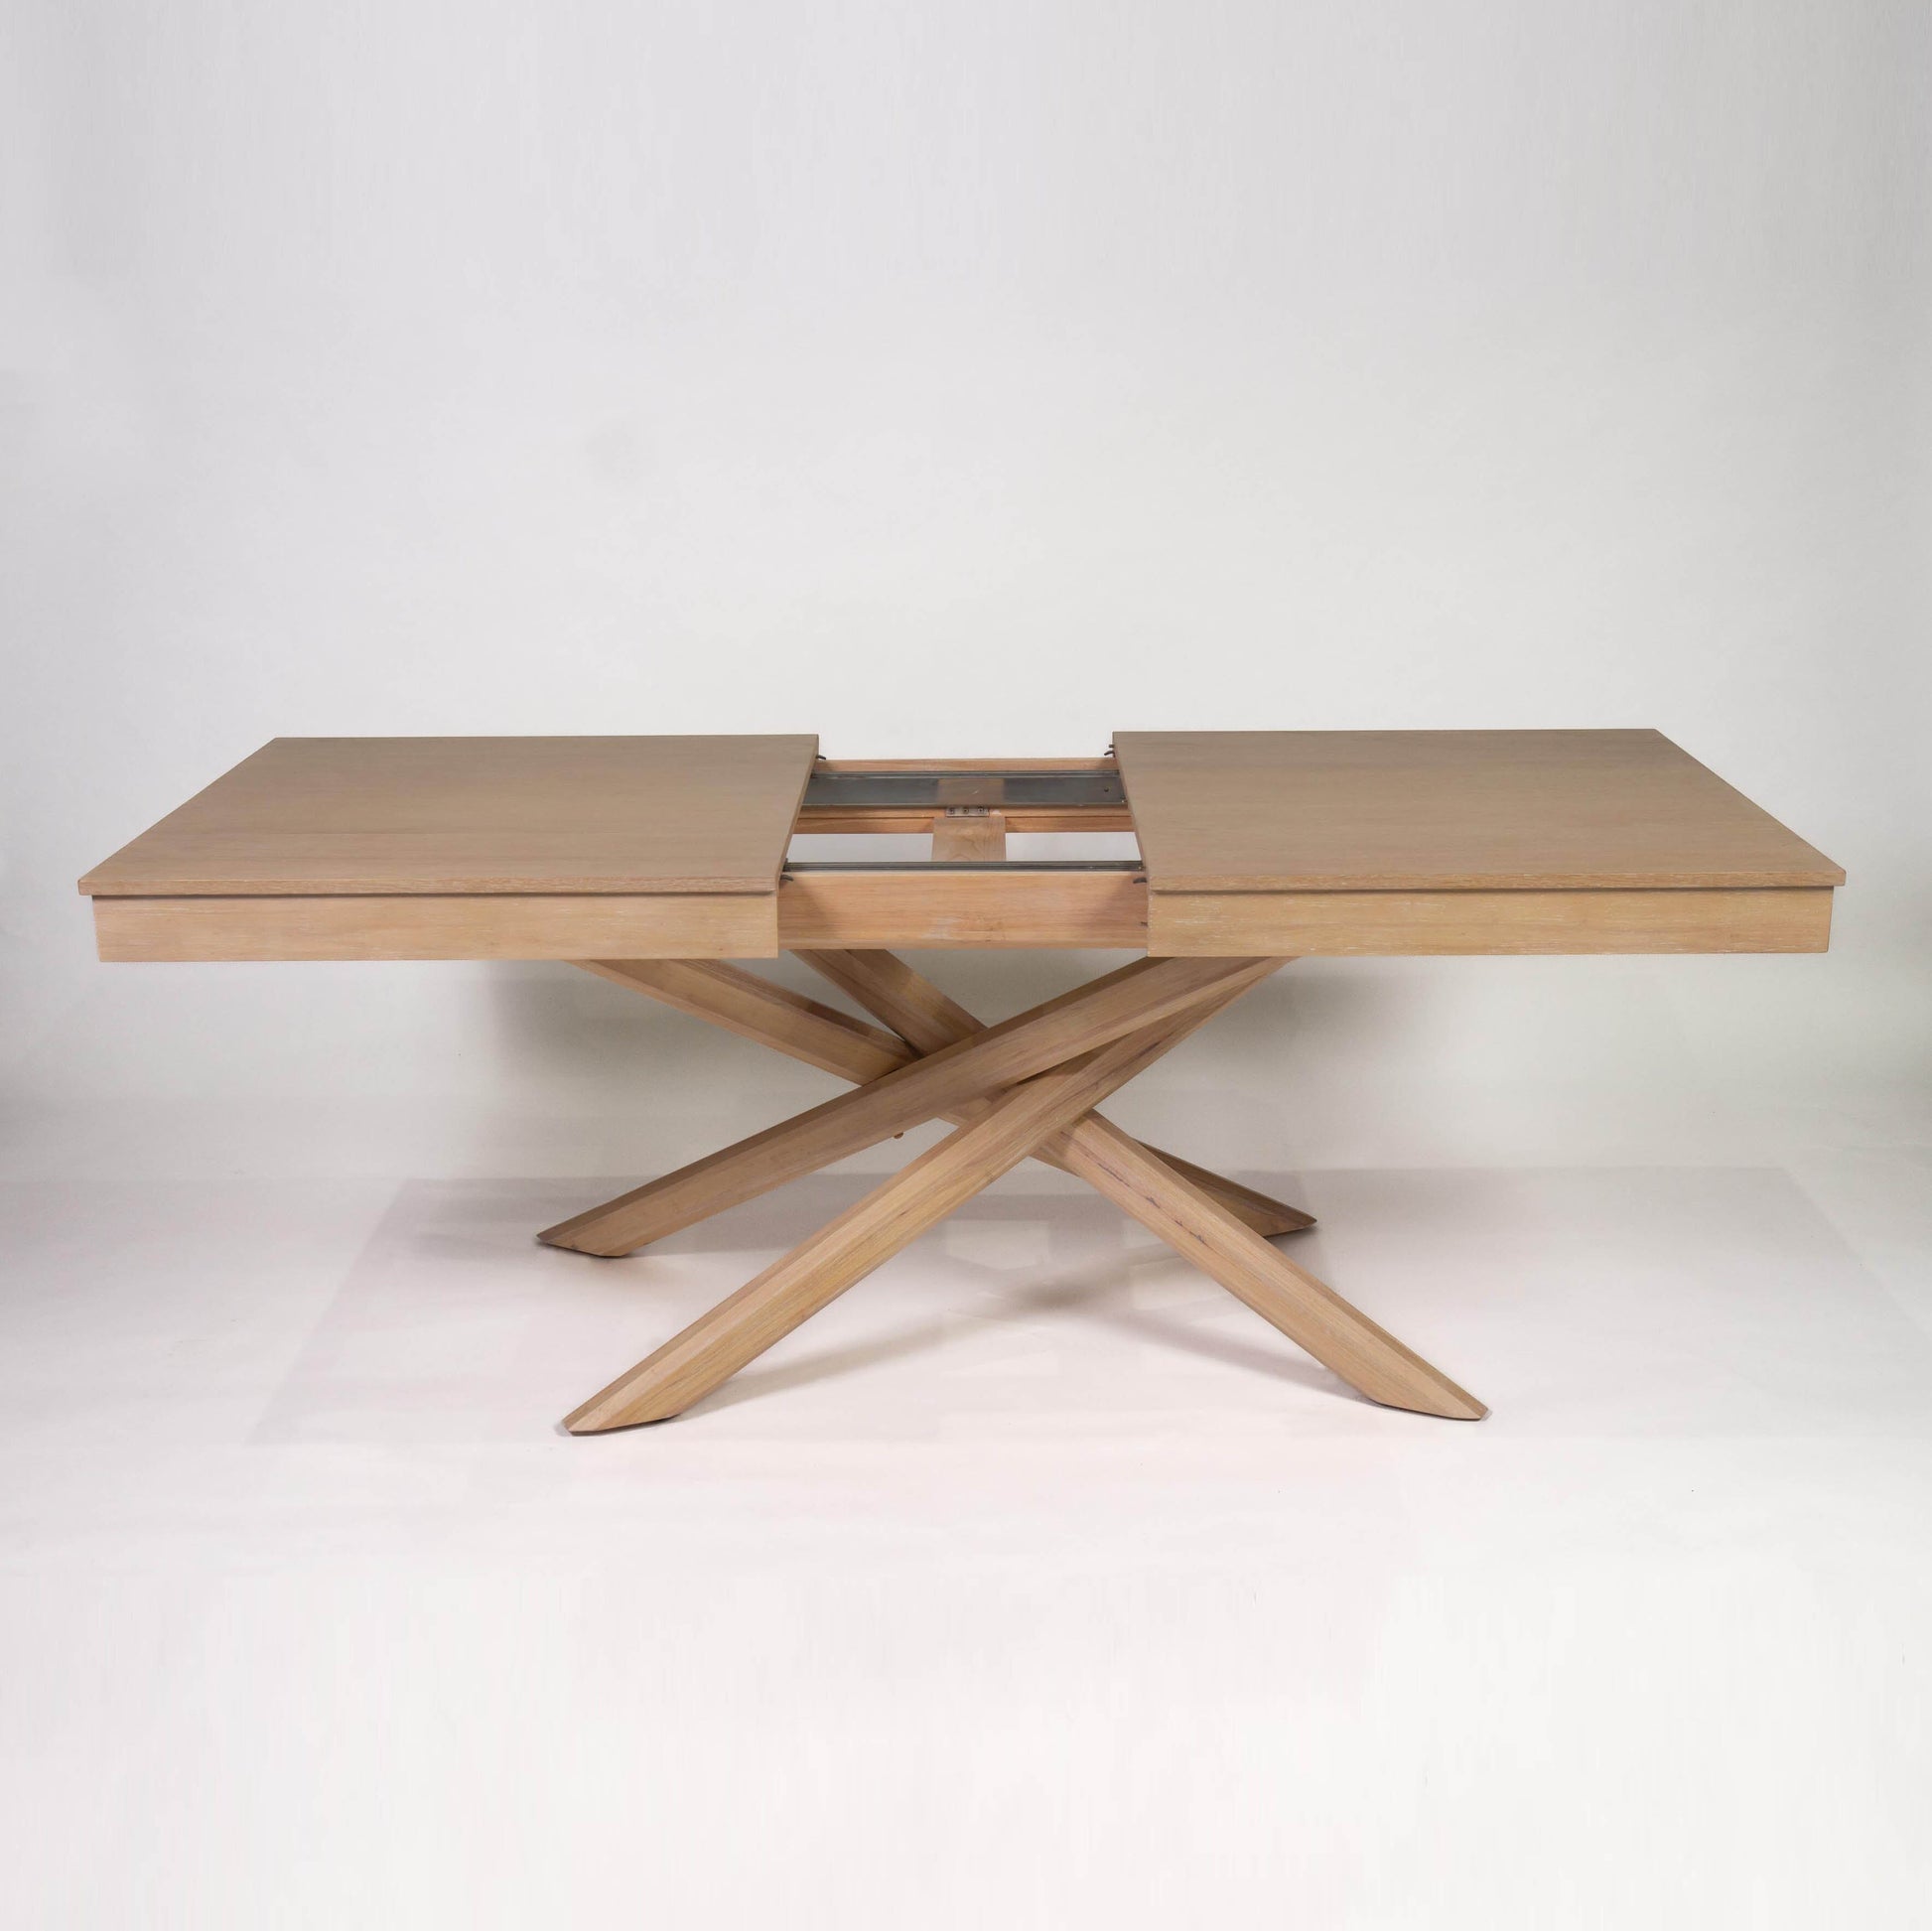 Amelia whitewash wood extendable dining table - Laura James